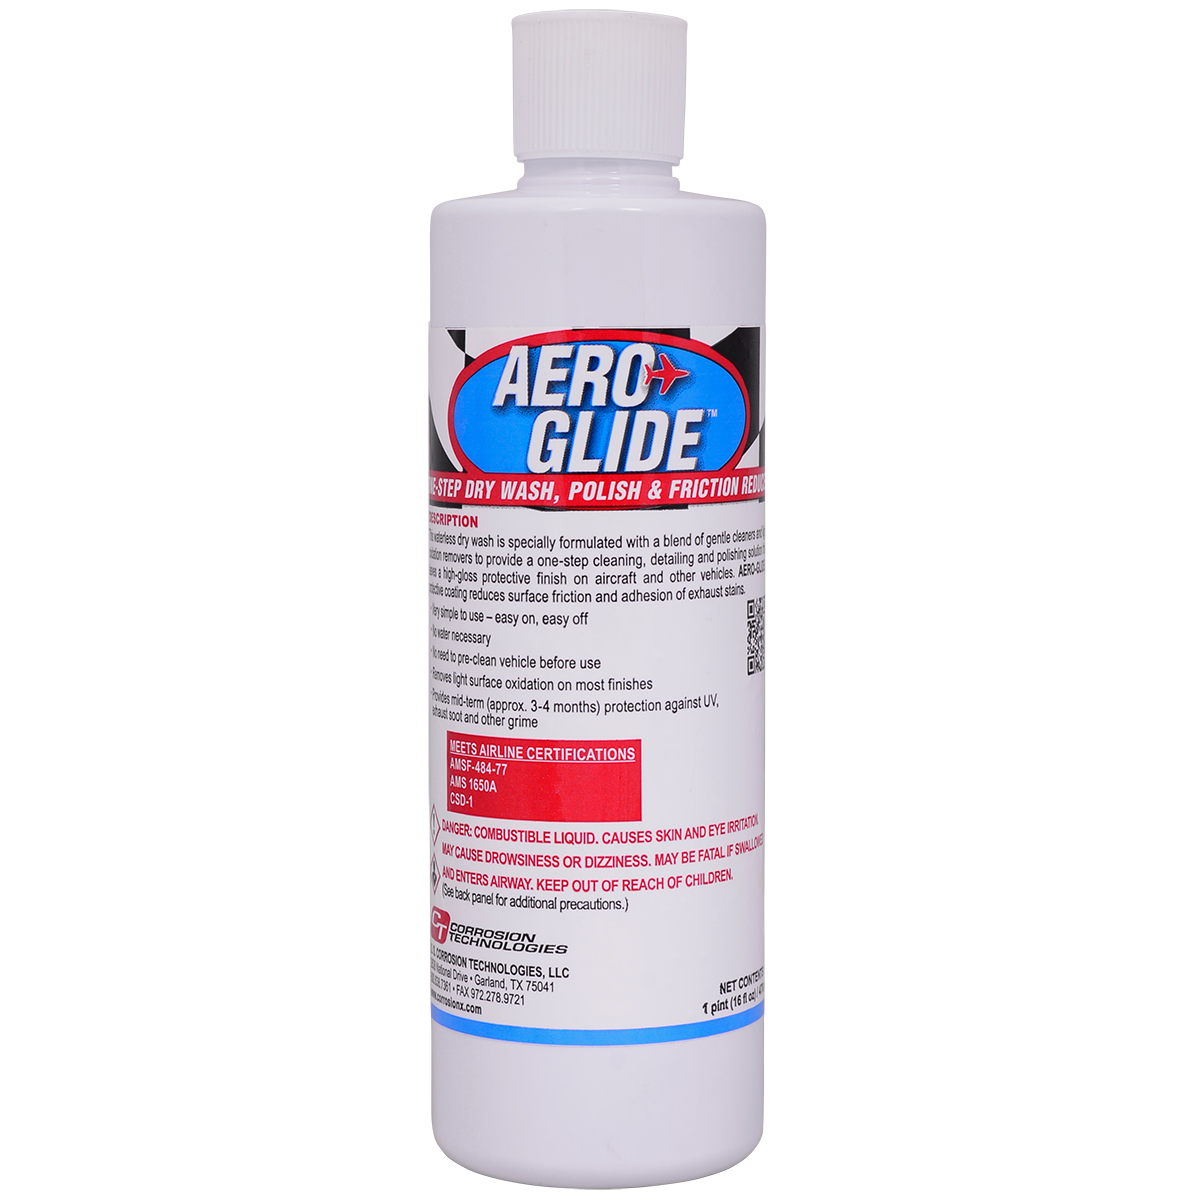 Aero-Glide cleaner polish